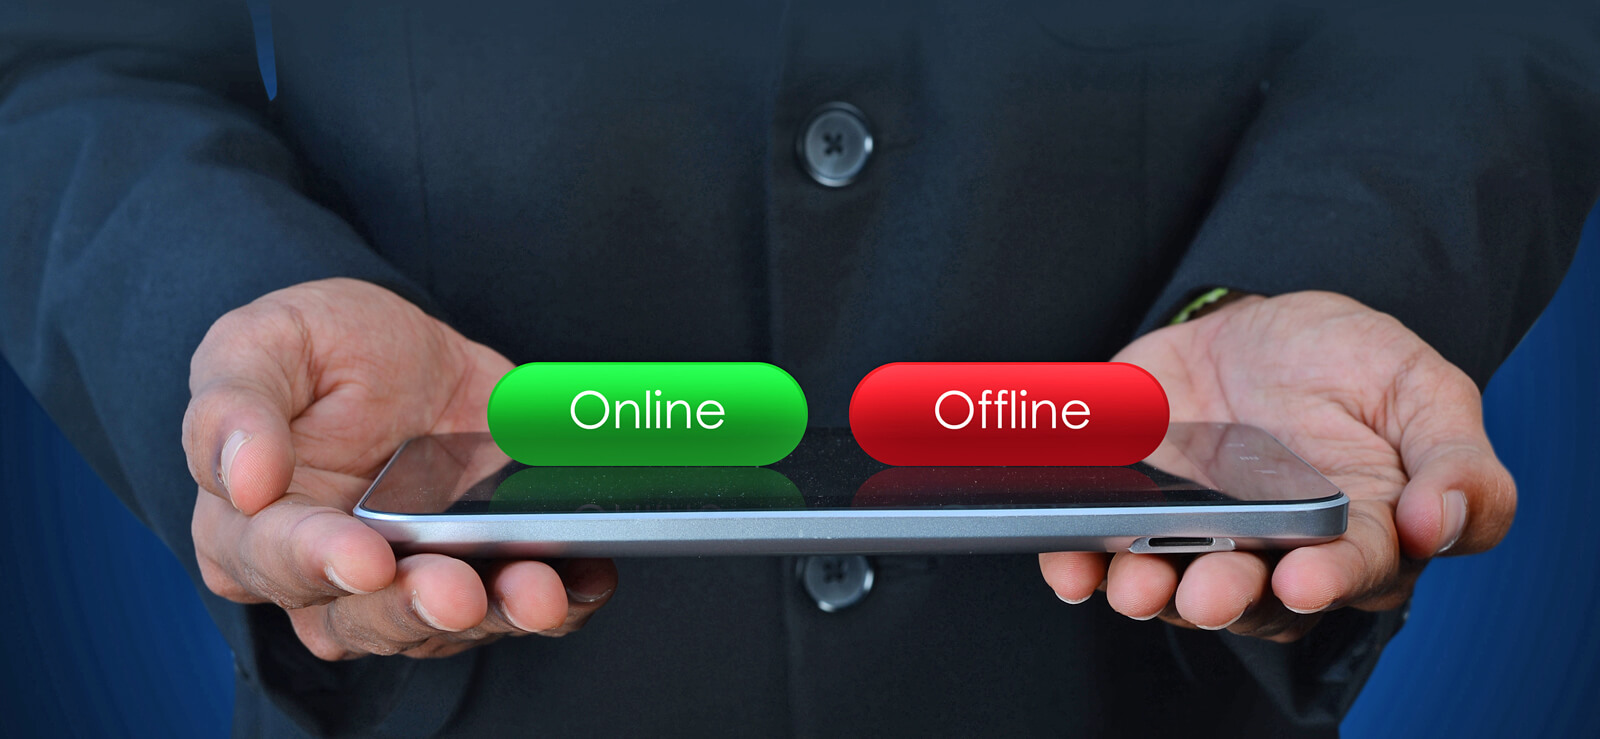 Outlook from offline to online